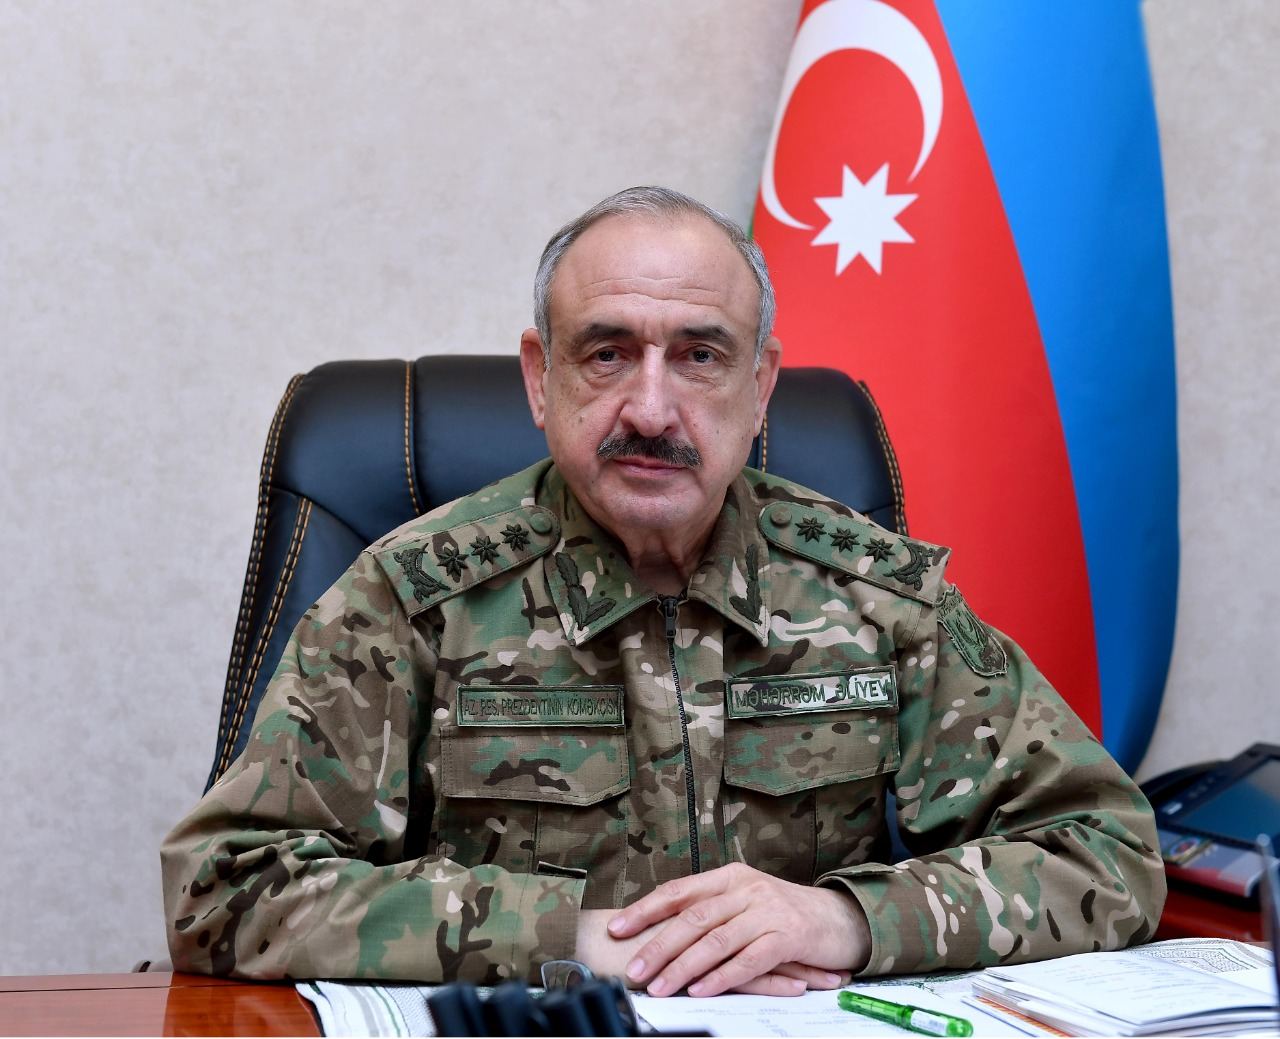 Магеррам Алиев награжден орденом "Шохрат"